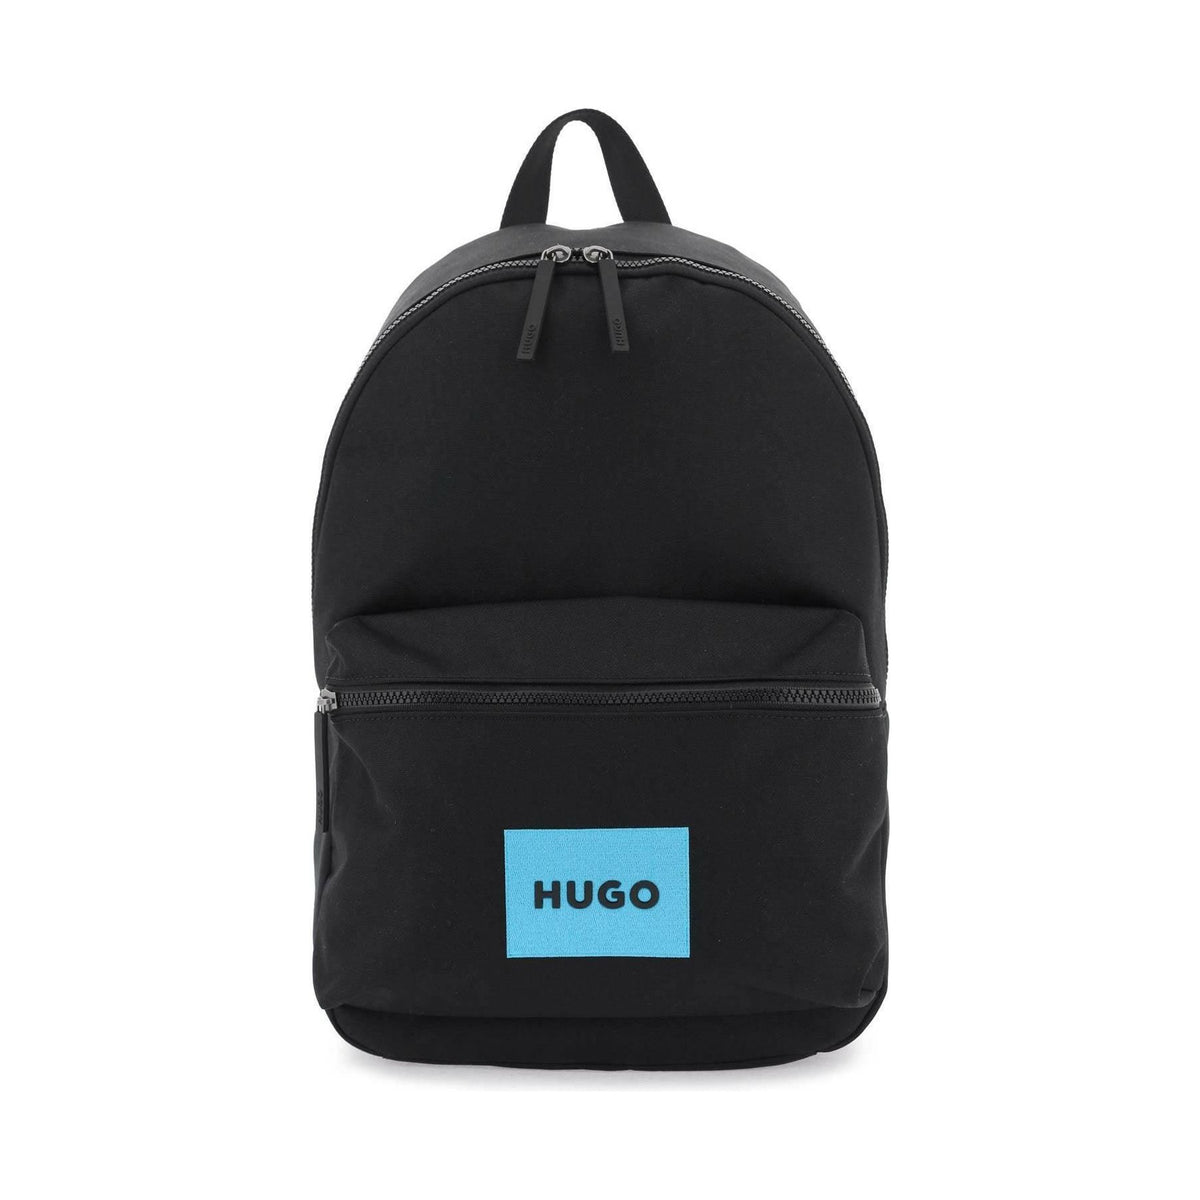 HUGO - Black Recycled Nylon Backpack - JOHN JULIA